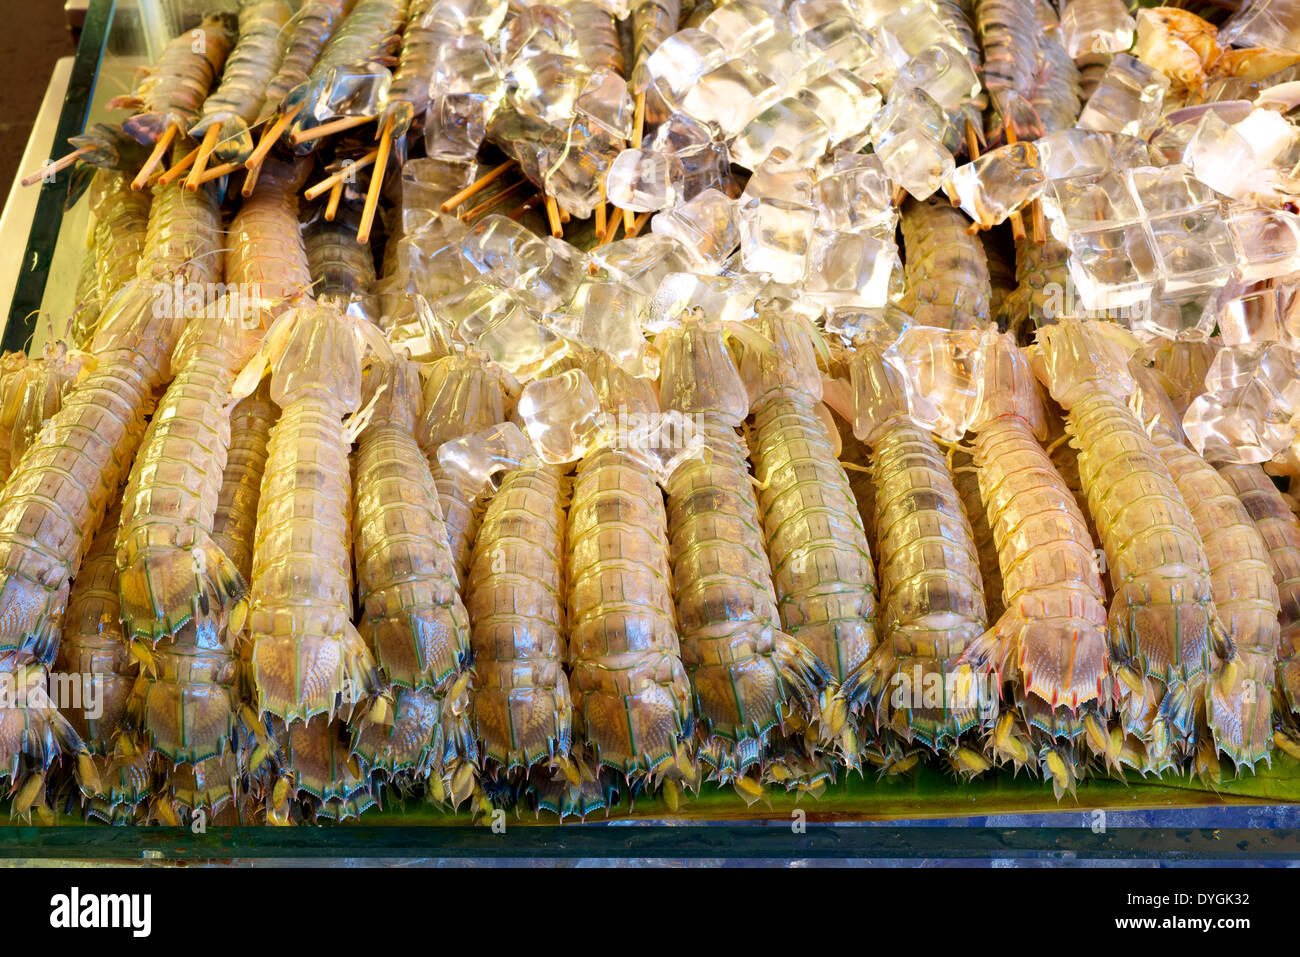 Fresh mantis Shrimp with ice in restaurant buffet Stock Photo